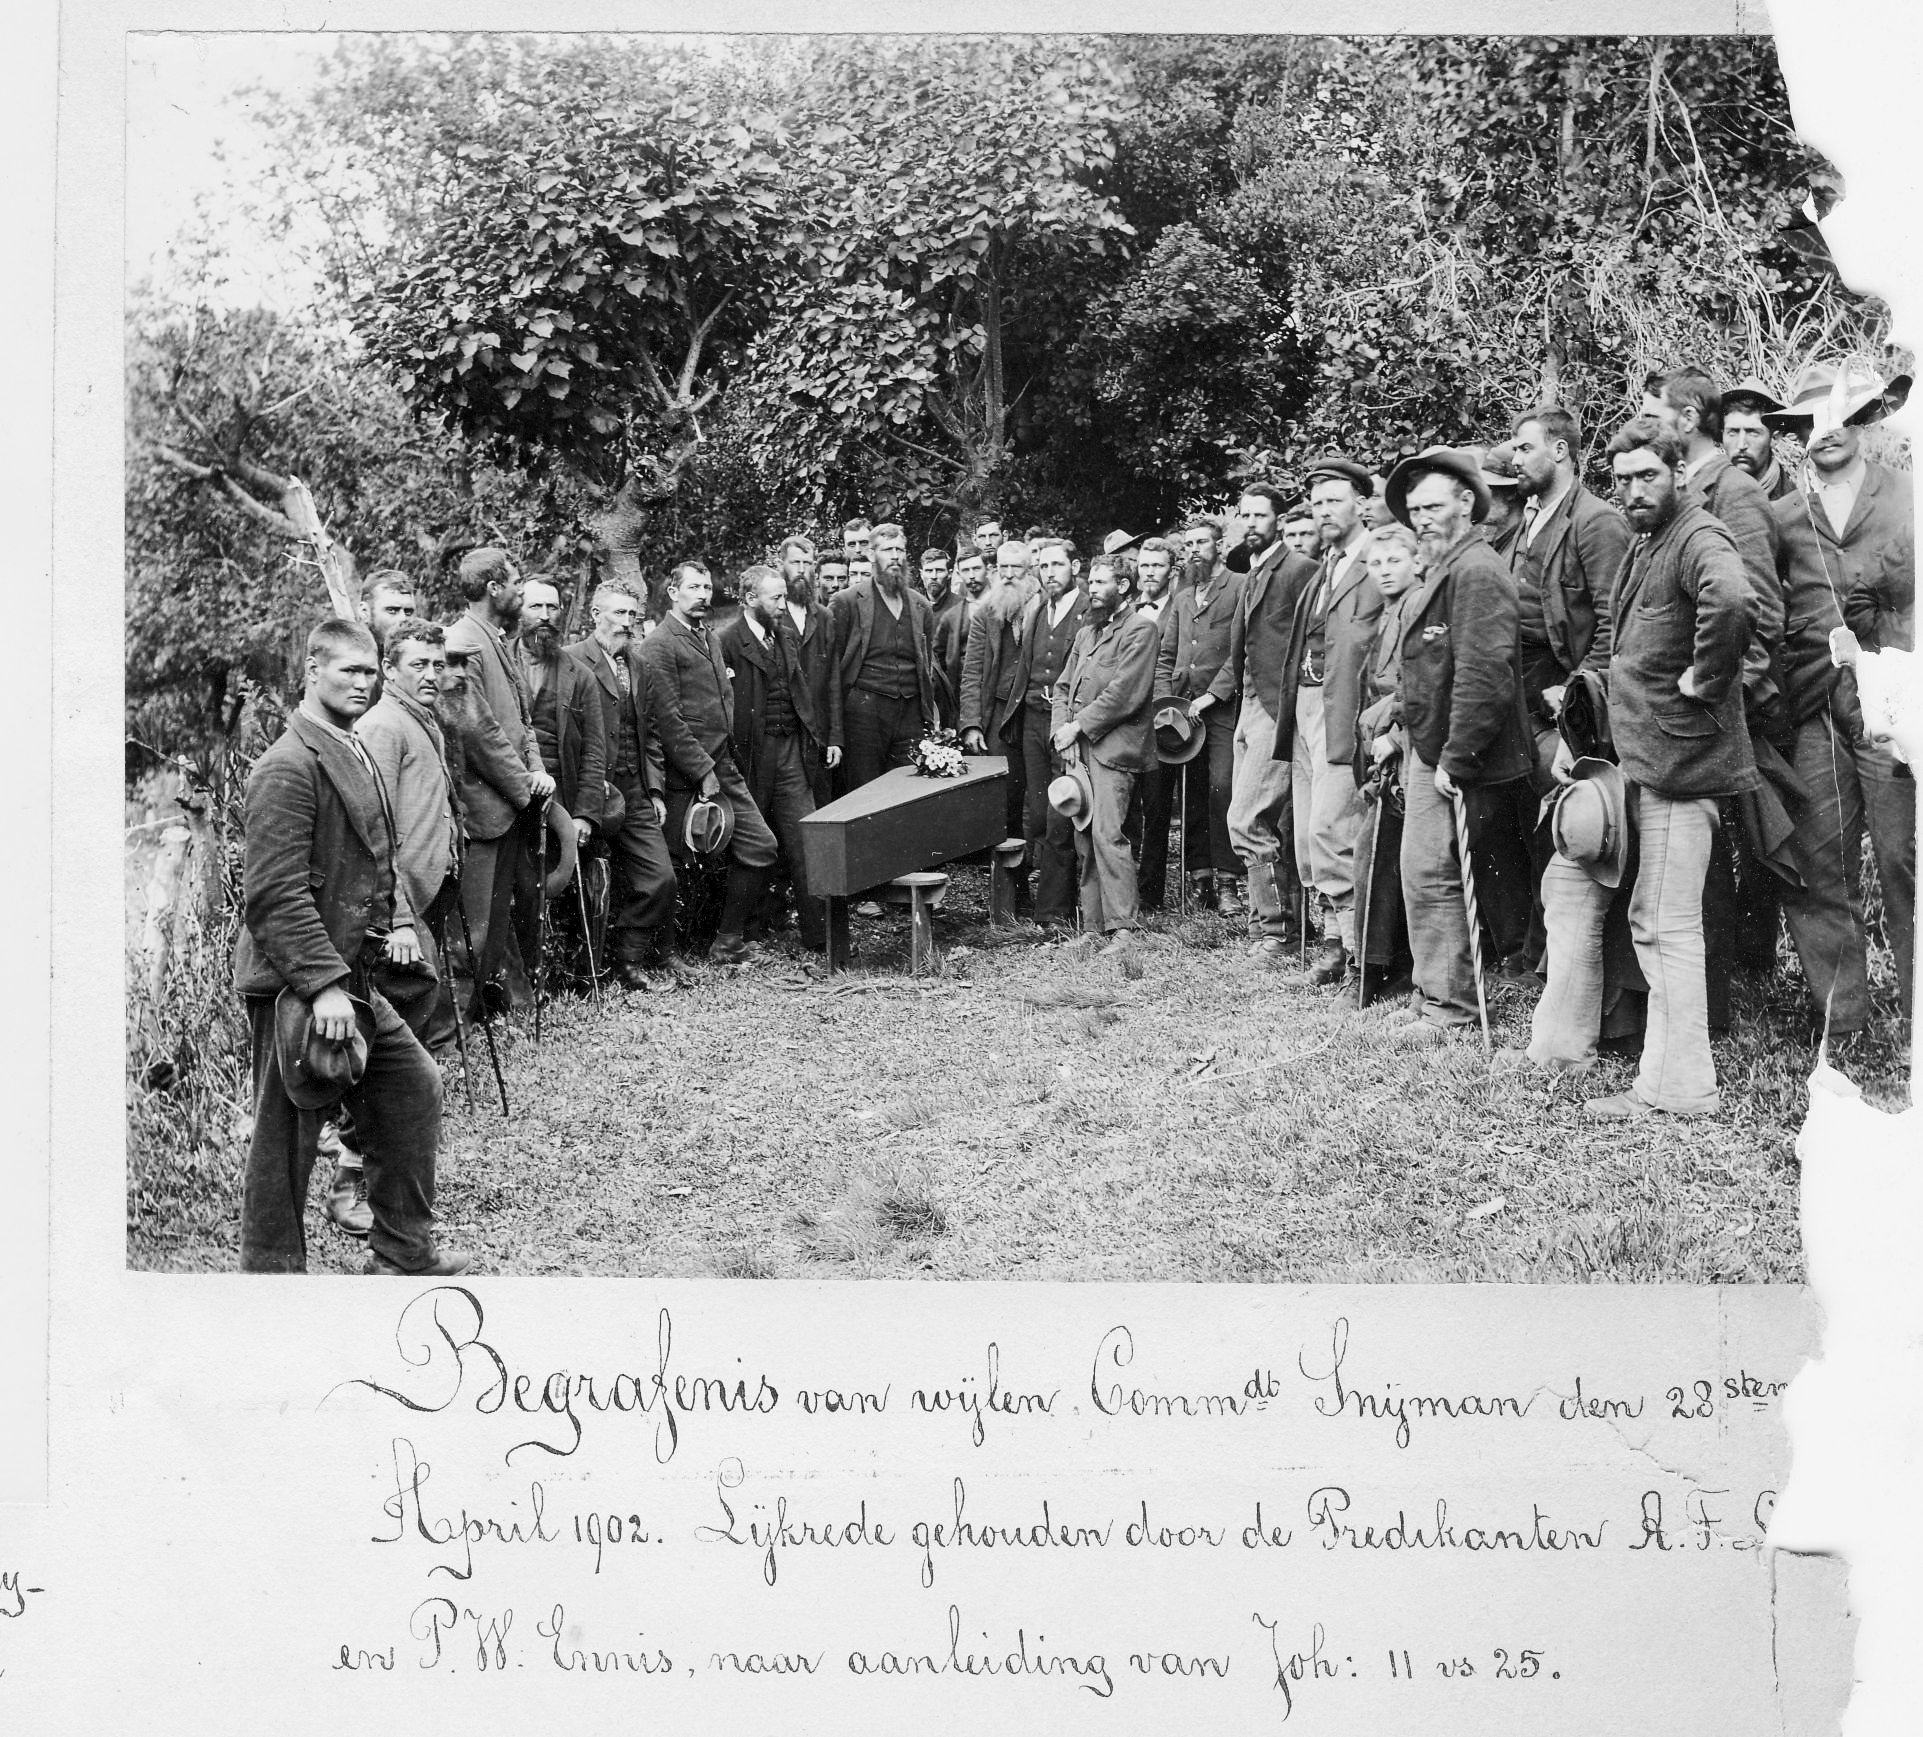 Burial of R.J.Snyman